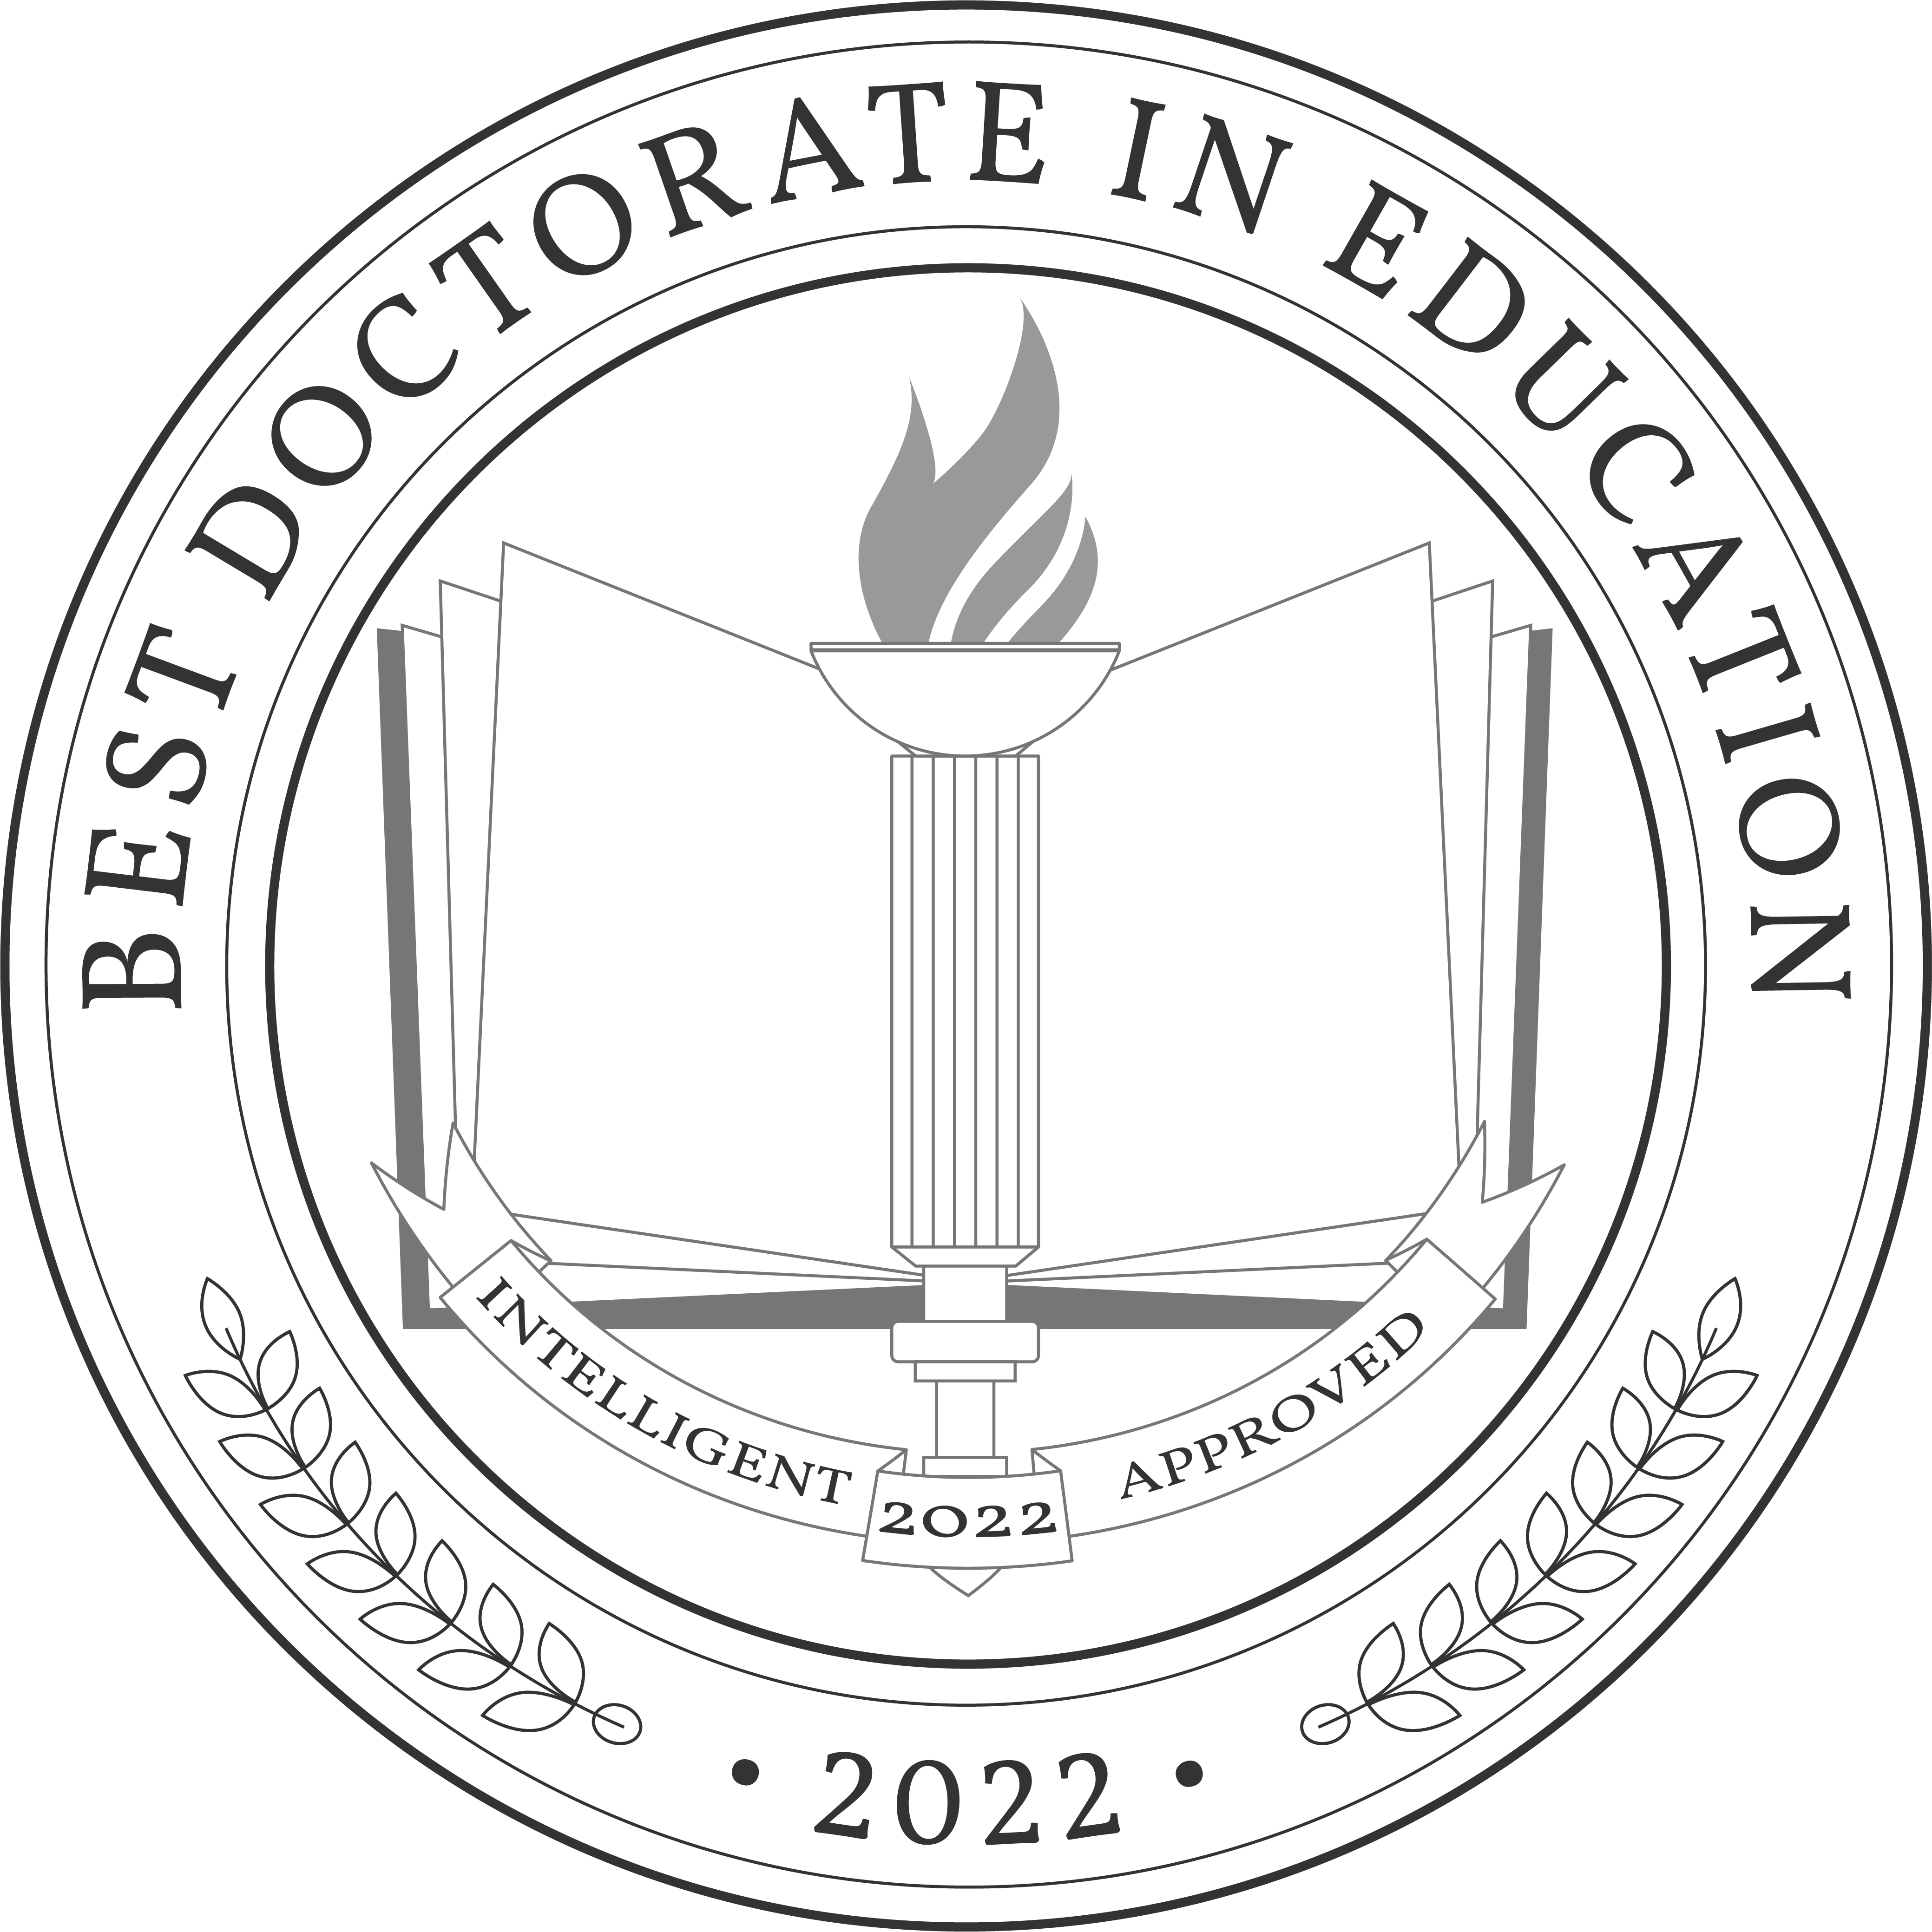 Best Online Doctorate in Education Degree Programs